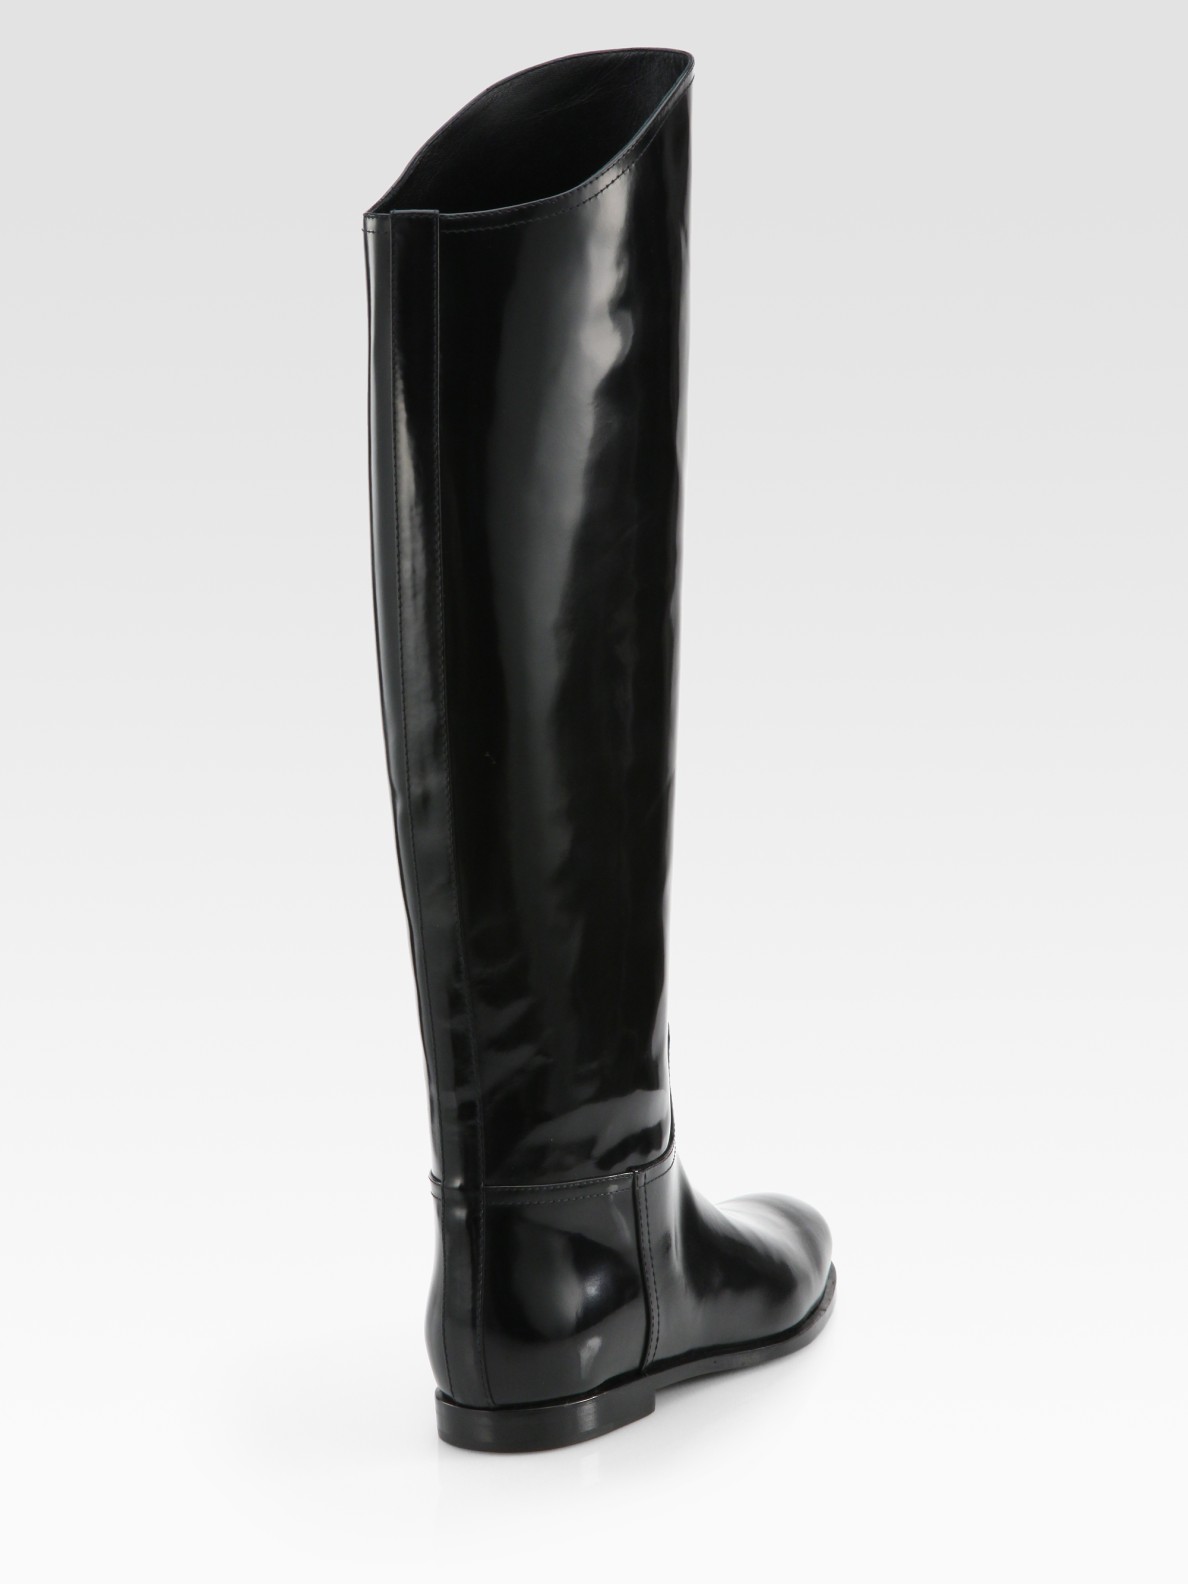 Bottega Veneta Patent-Leather Riding Boots in Black - Lyst